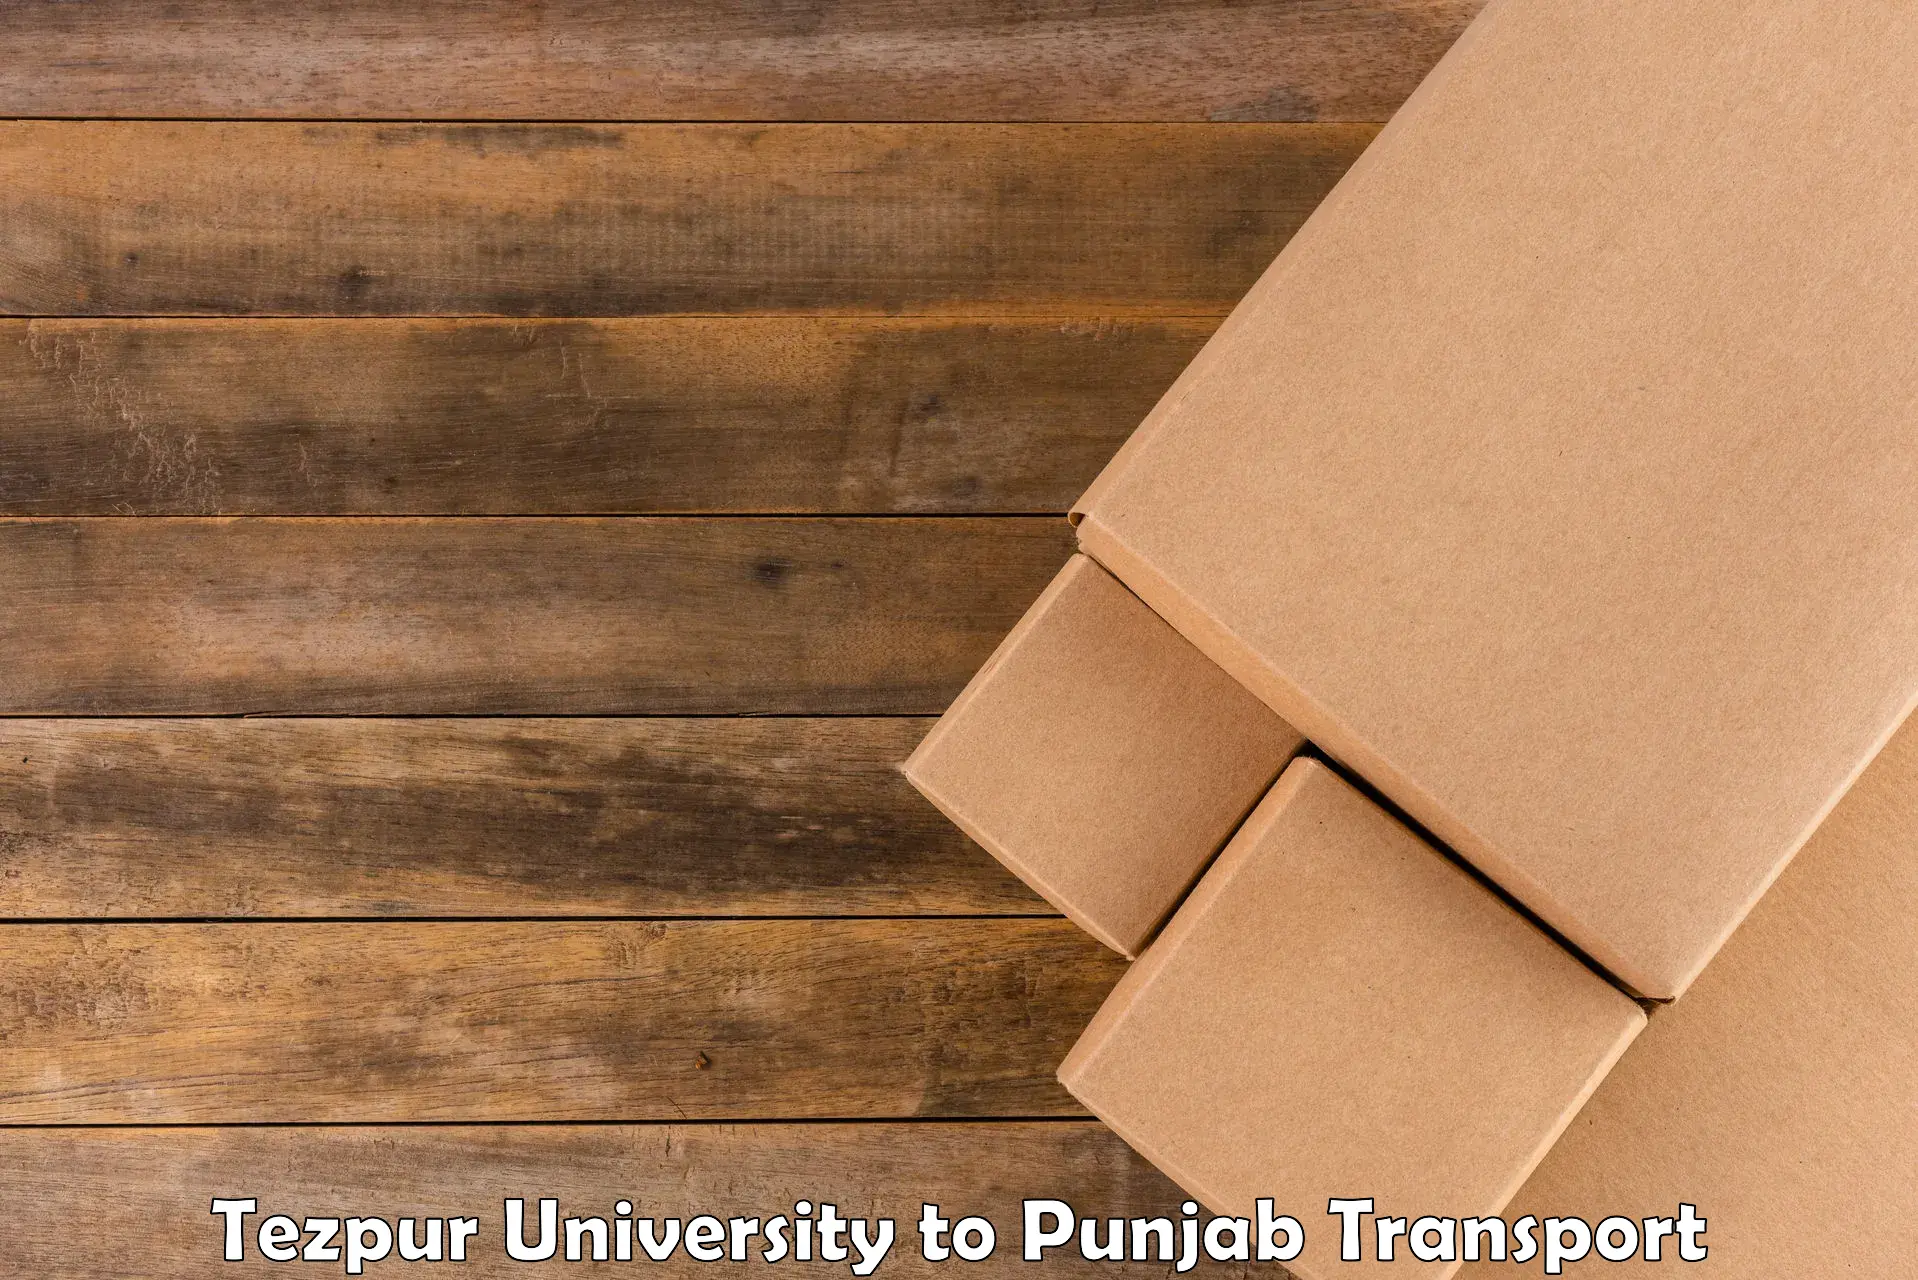 Nearby transport service Tezpur University to Patiala